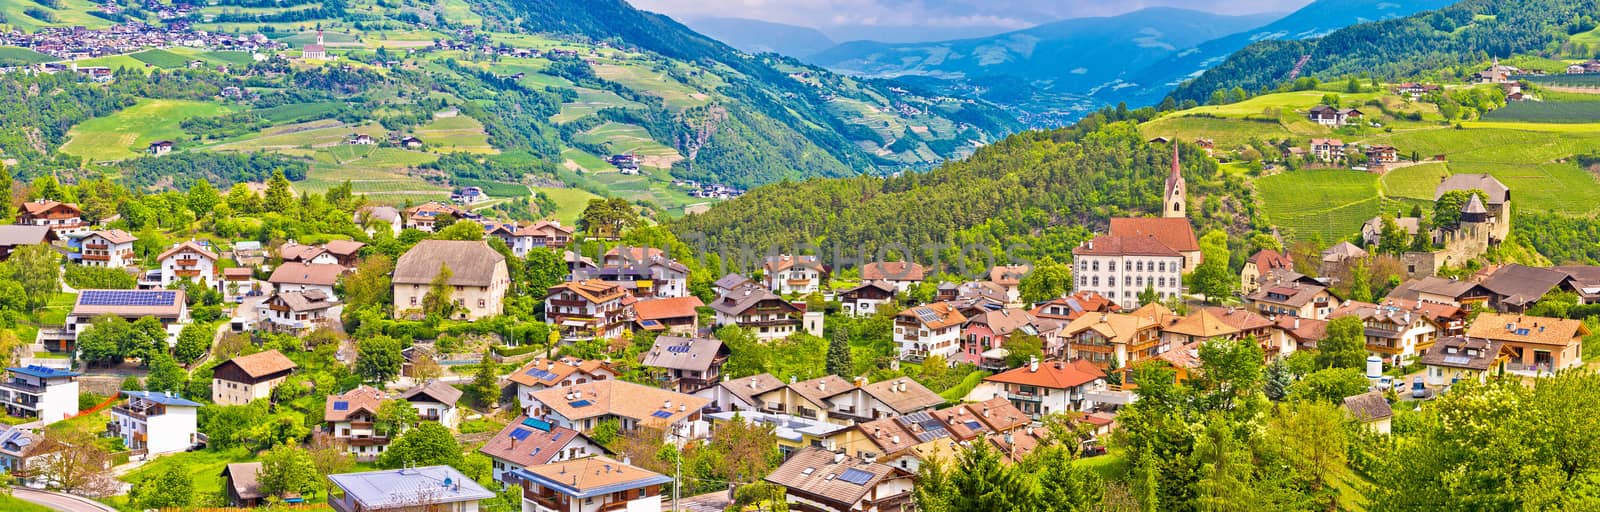 Idyllic alpine village of Gudon architecture and landscape panor by xbrchx